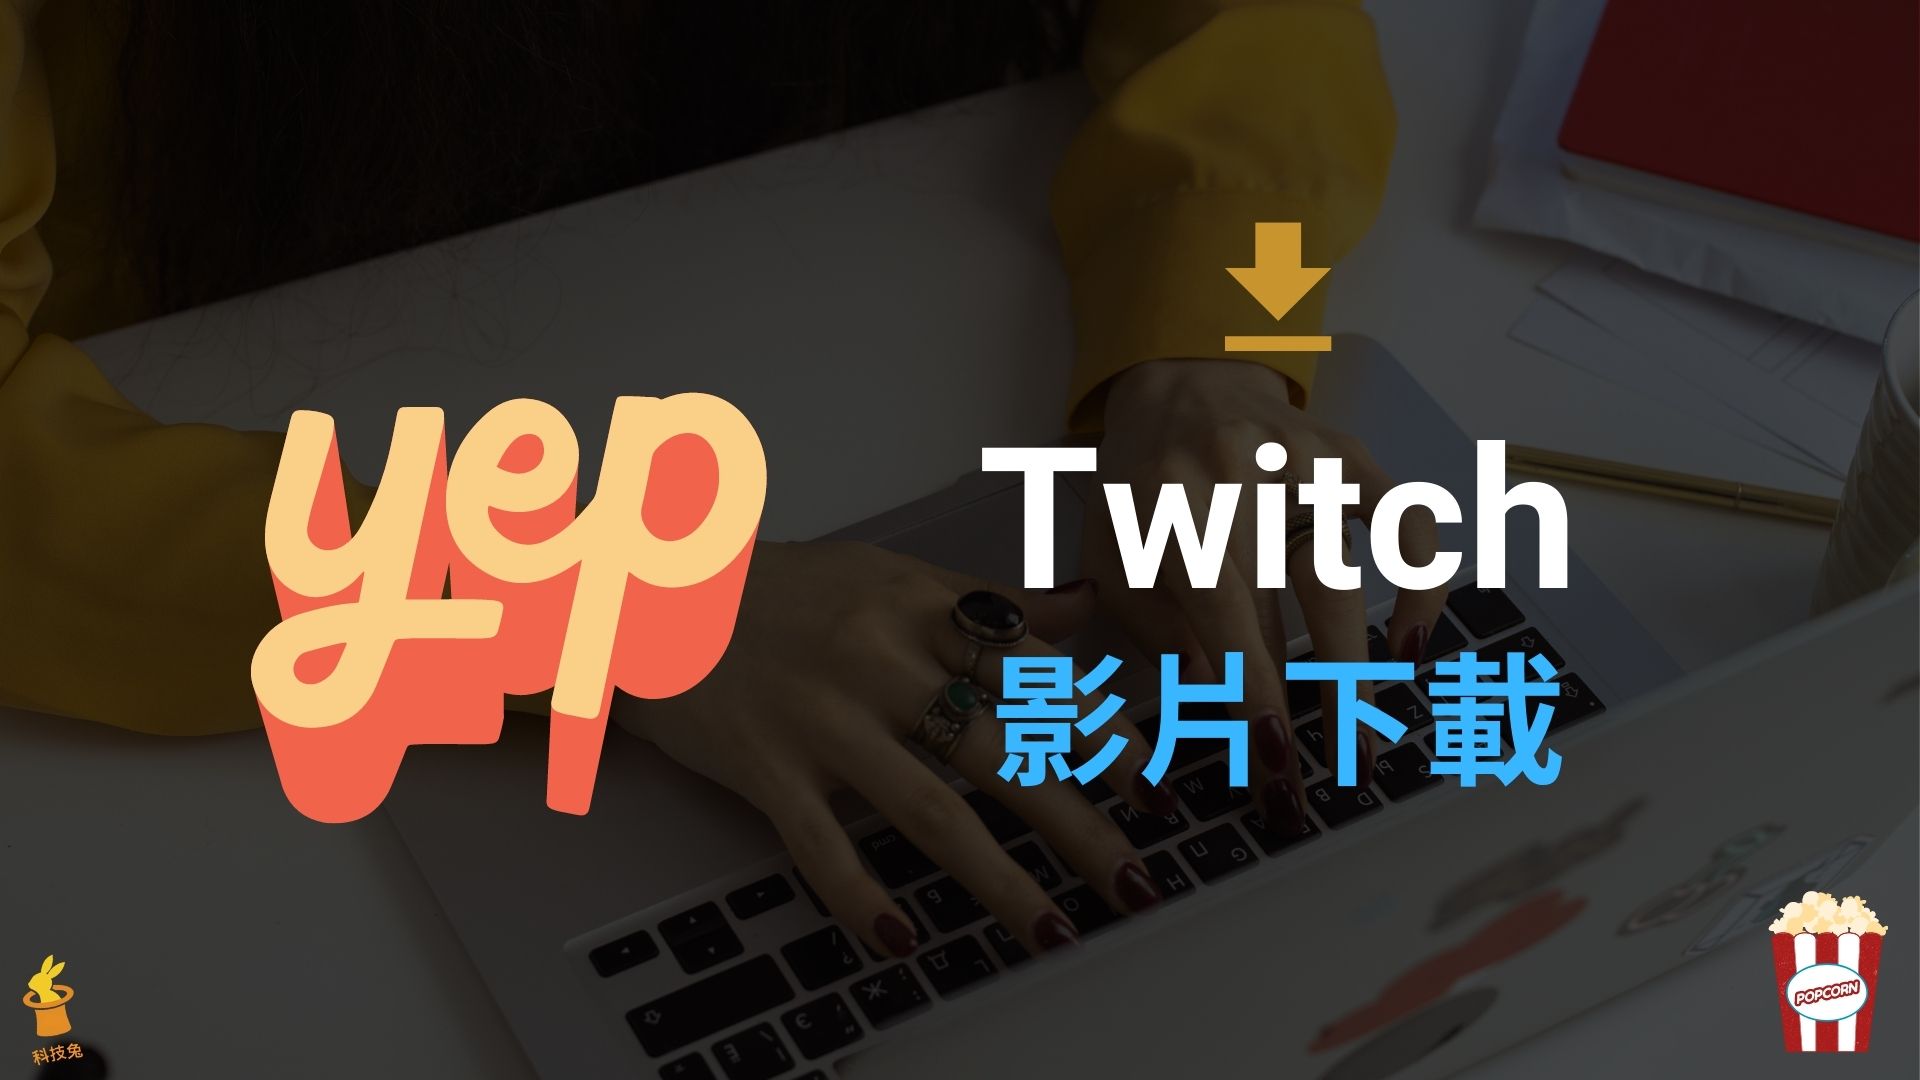 Untwitch 線上一鍵儲存下載twitch 影片 支援高畫質 教學 科技兔